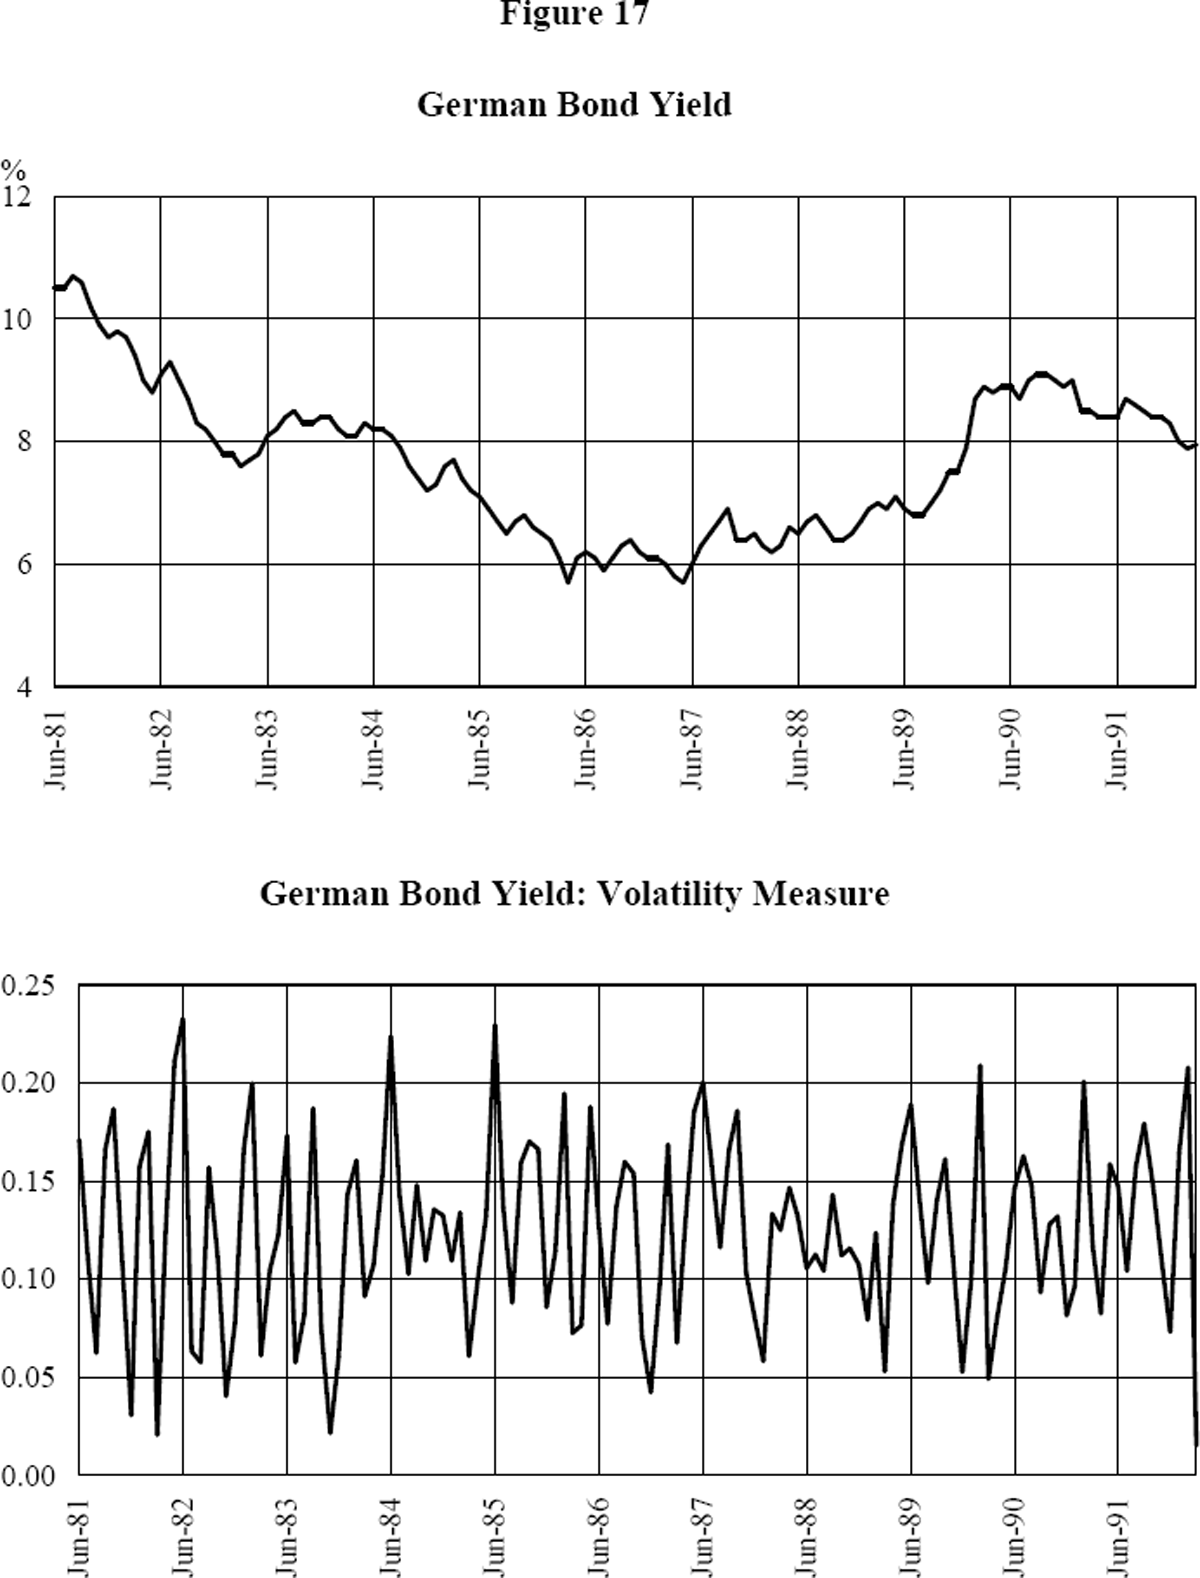 Figure 17: German Bond Yield and Volatility Measure